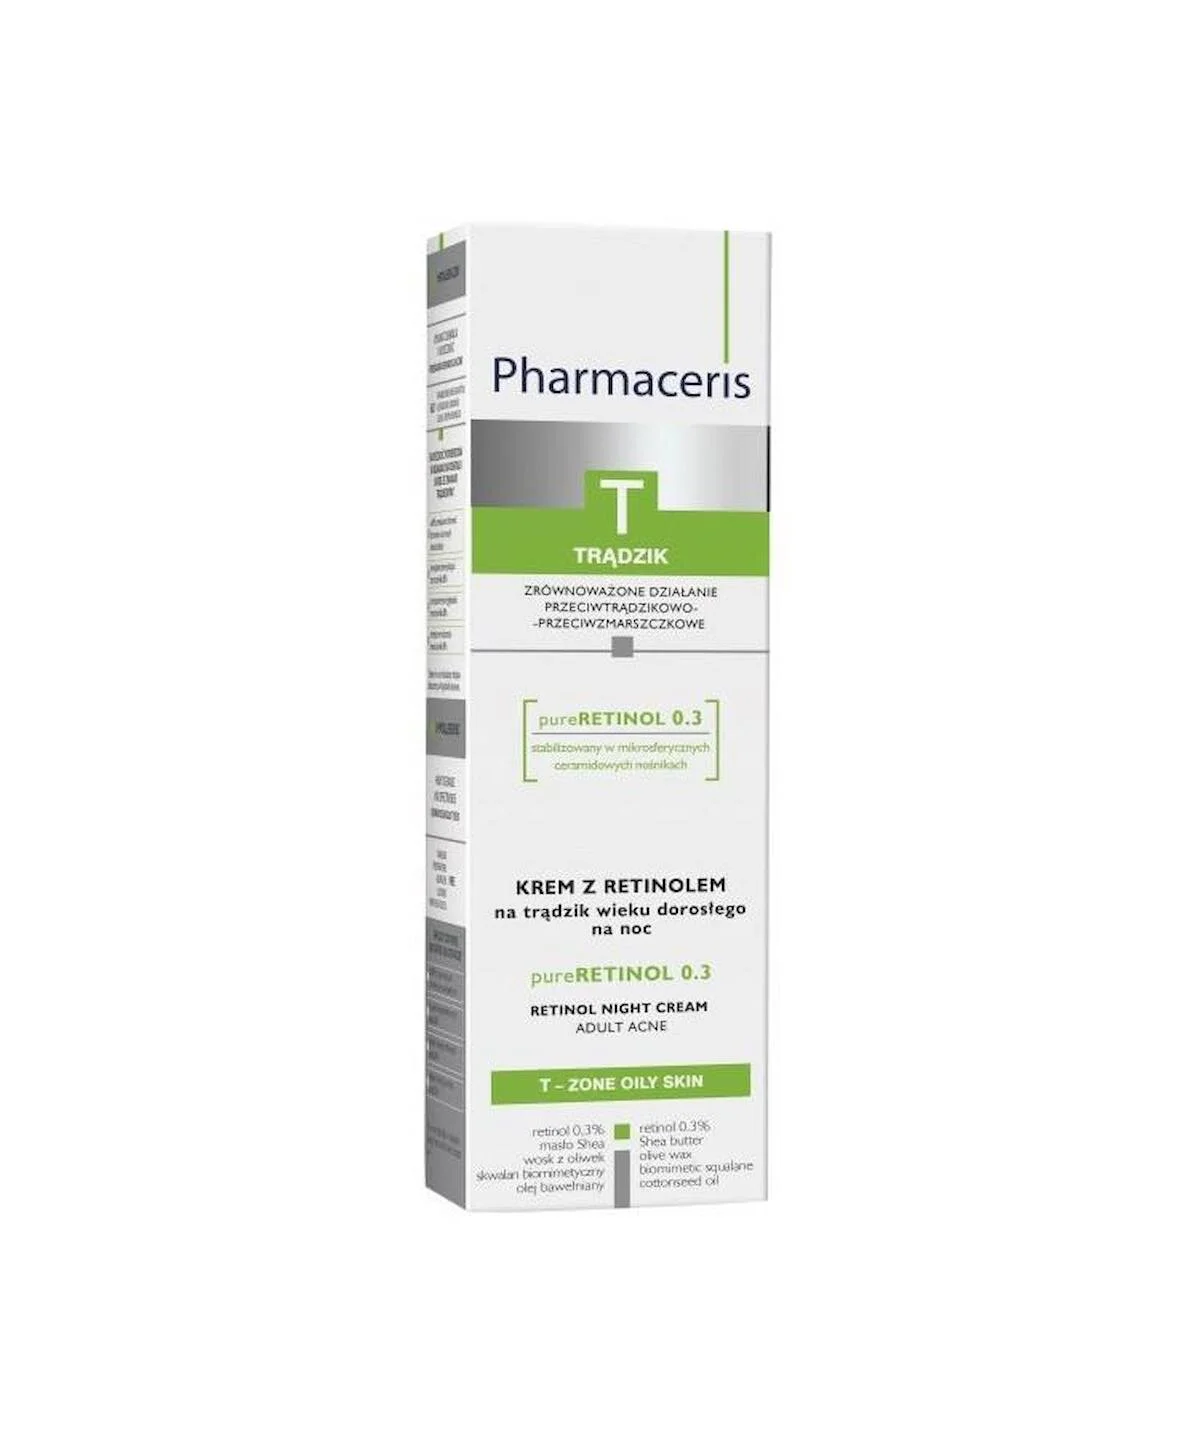 Pharmaceris T Retinol Night Cream Adult Acne 0.3 40 ML